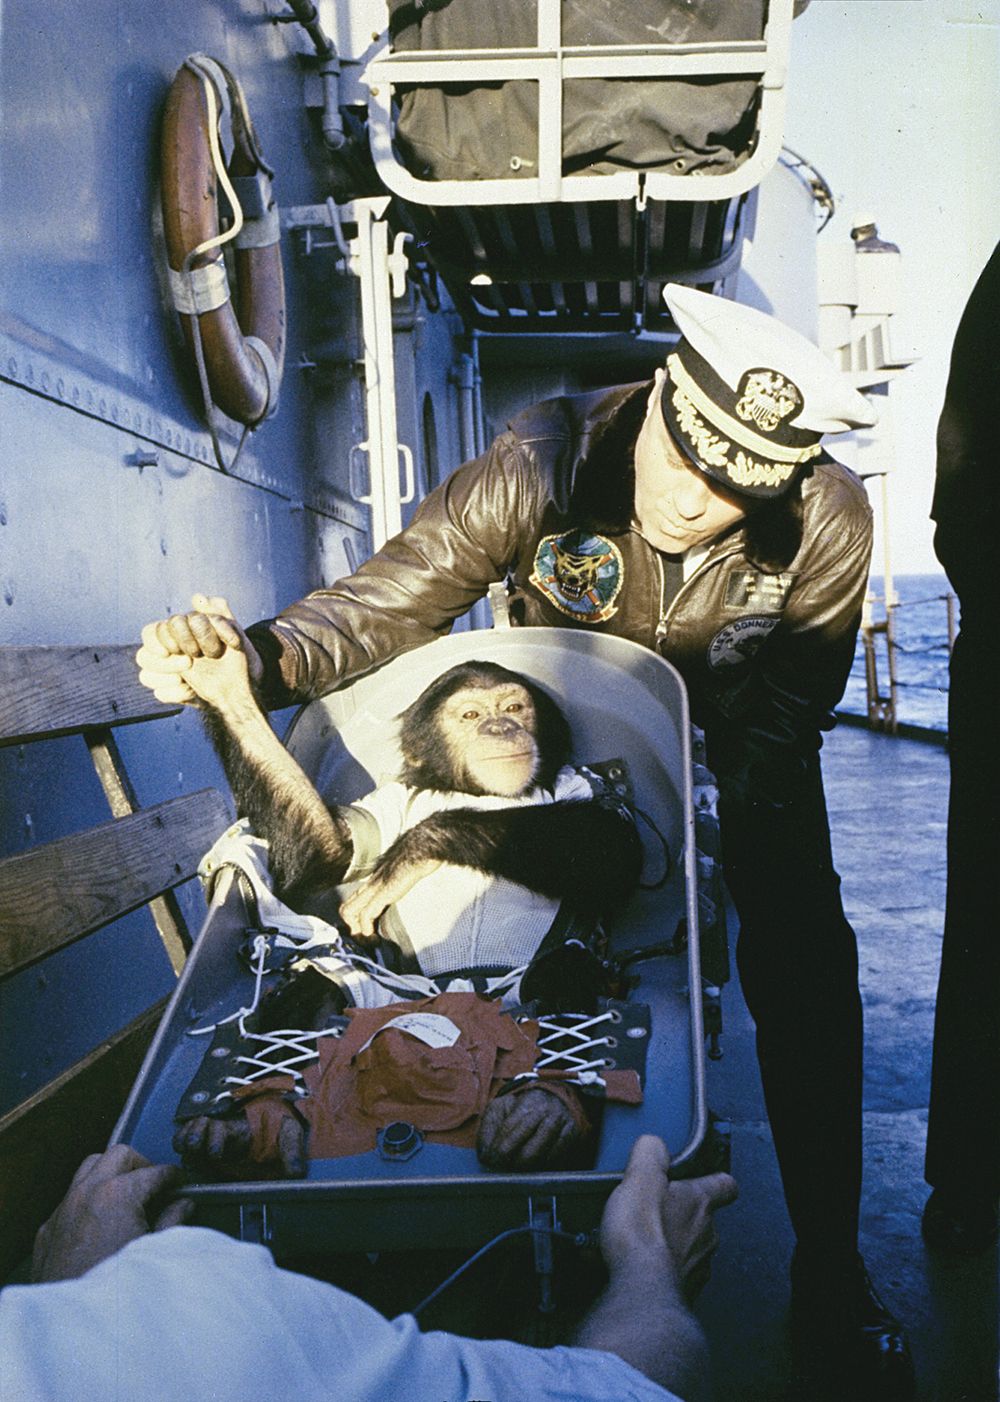 ham chimpanzee space